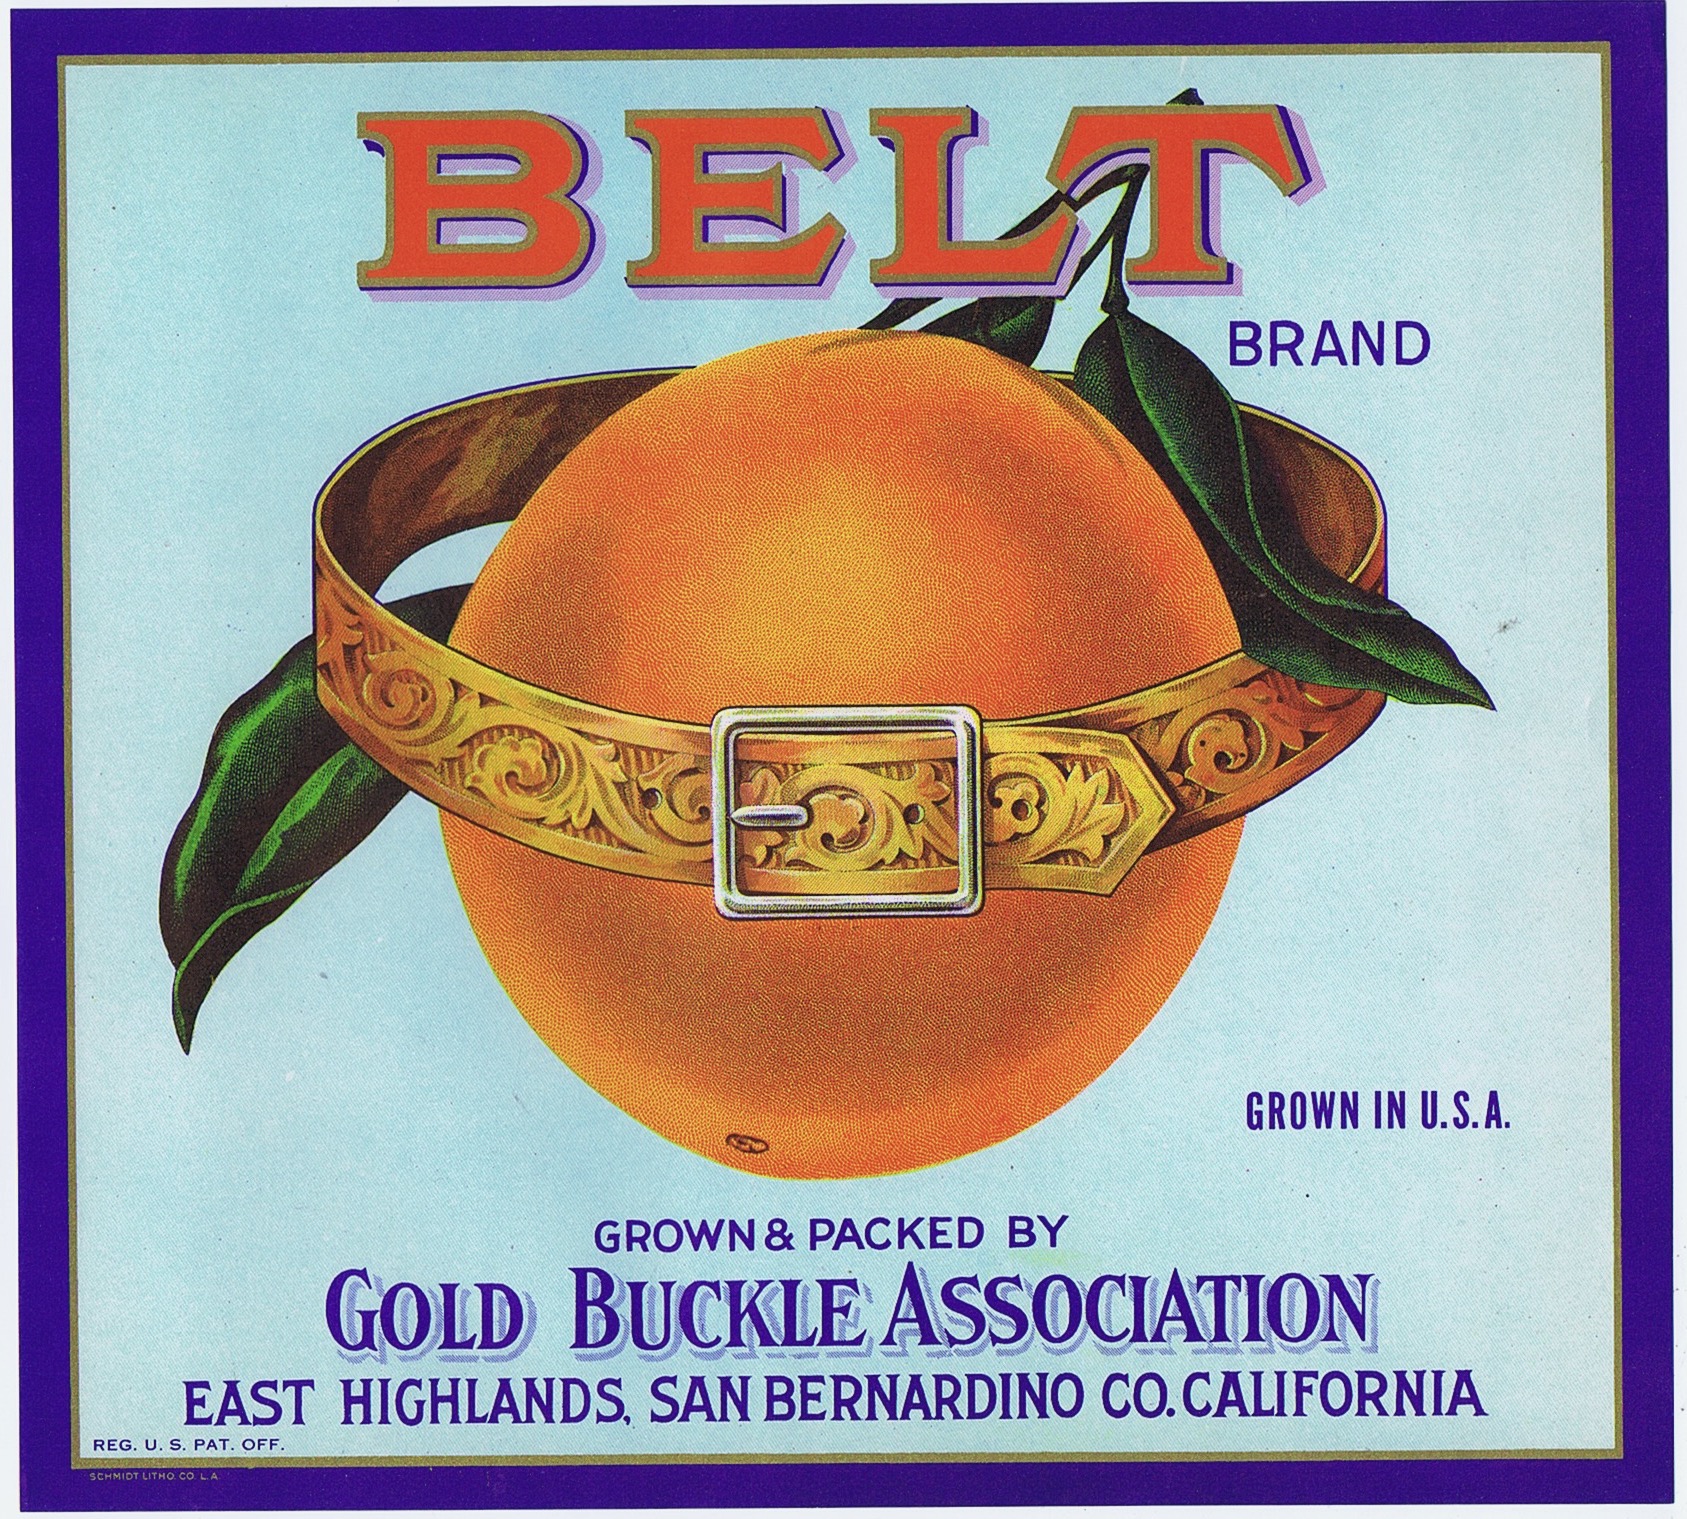 Bible *AN ORIGINAL LABEL* Hebrew REBECCA Vintage Placentia Orange Crate Label